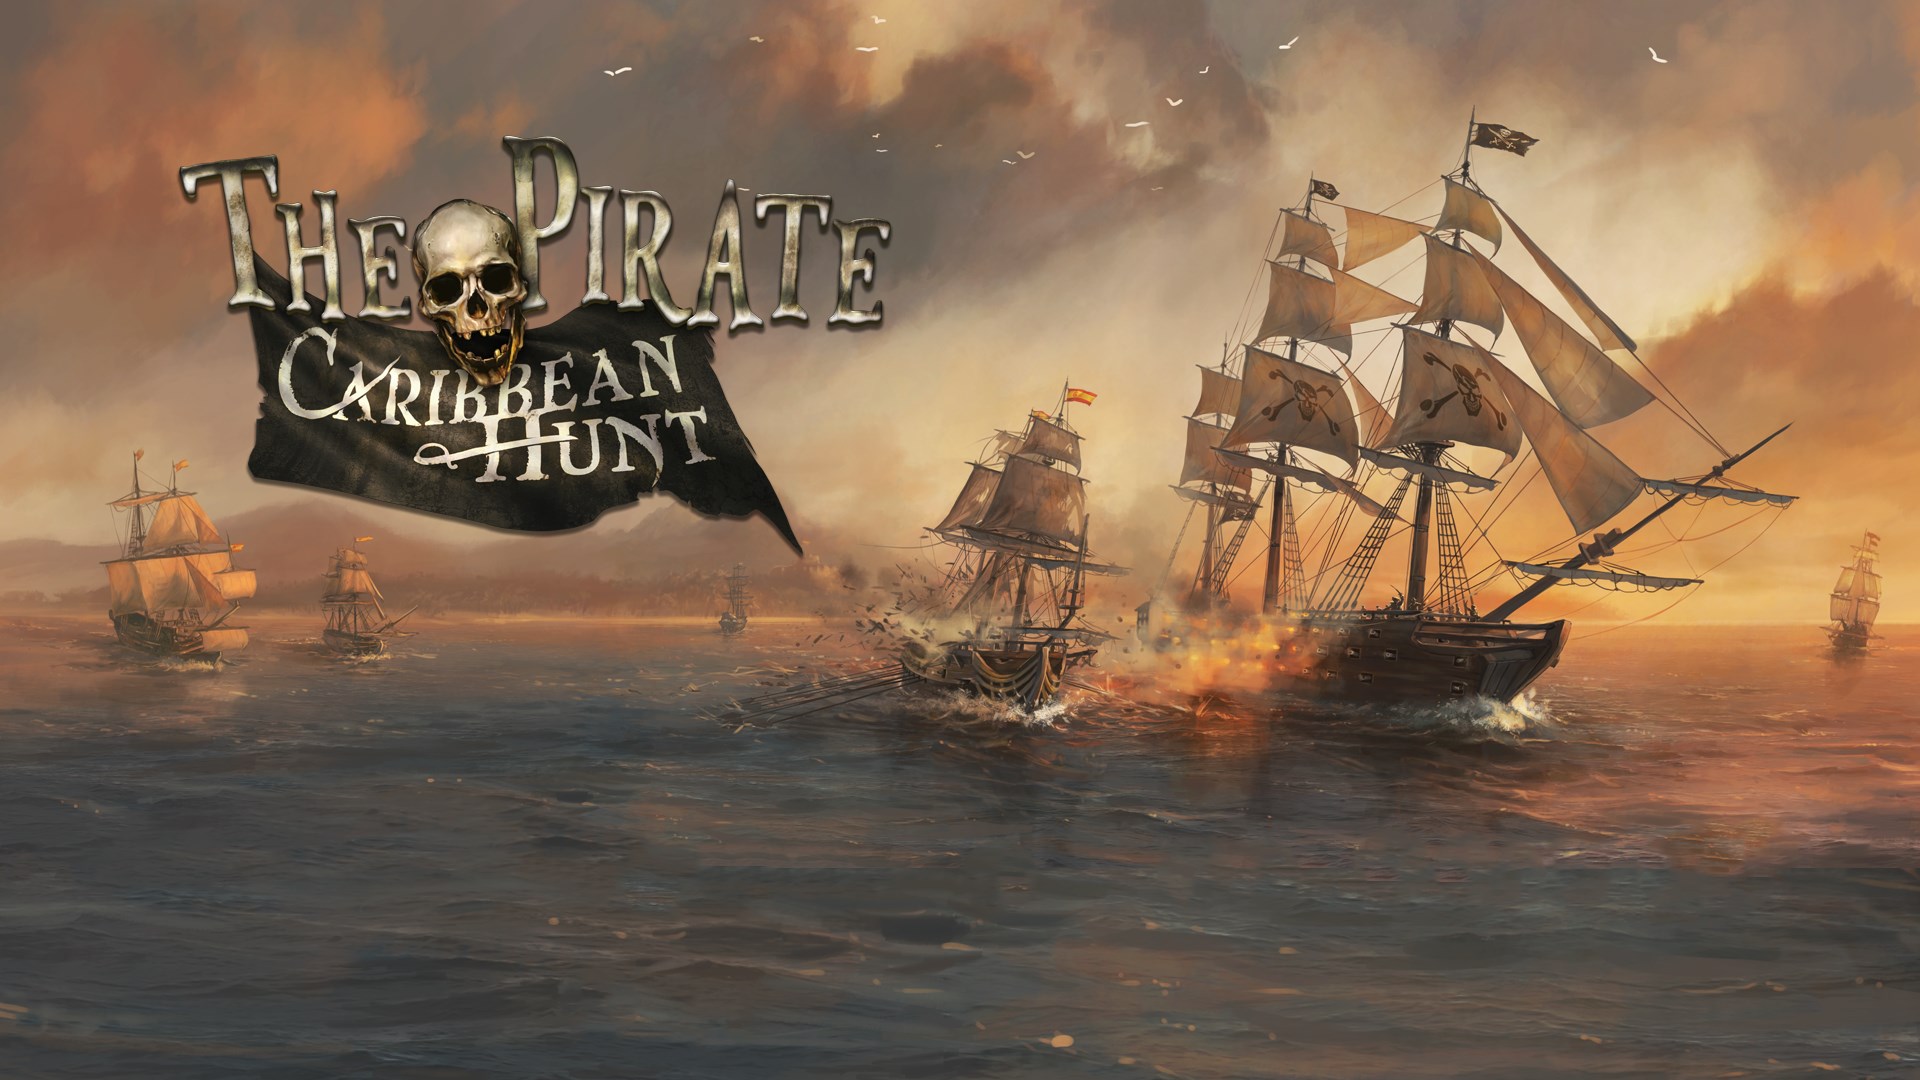 Pirate Island - PC Game Download